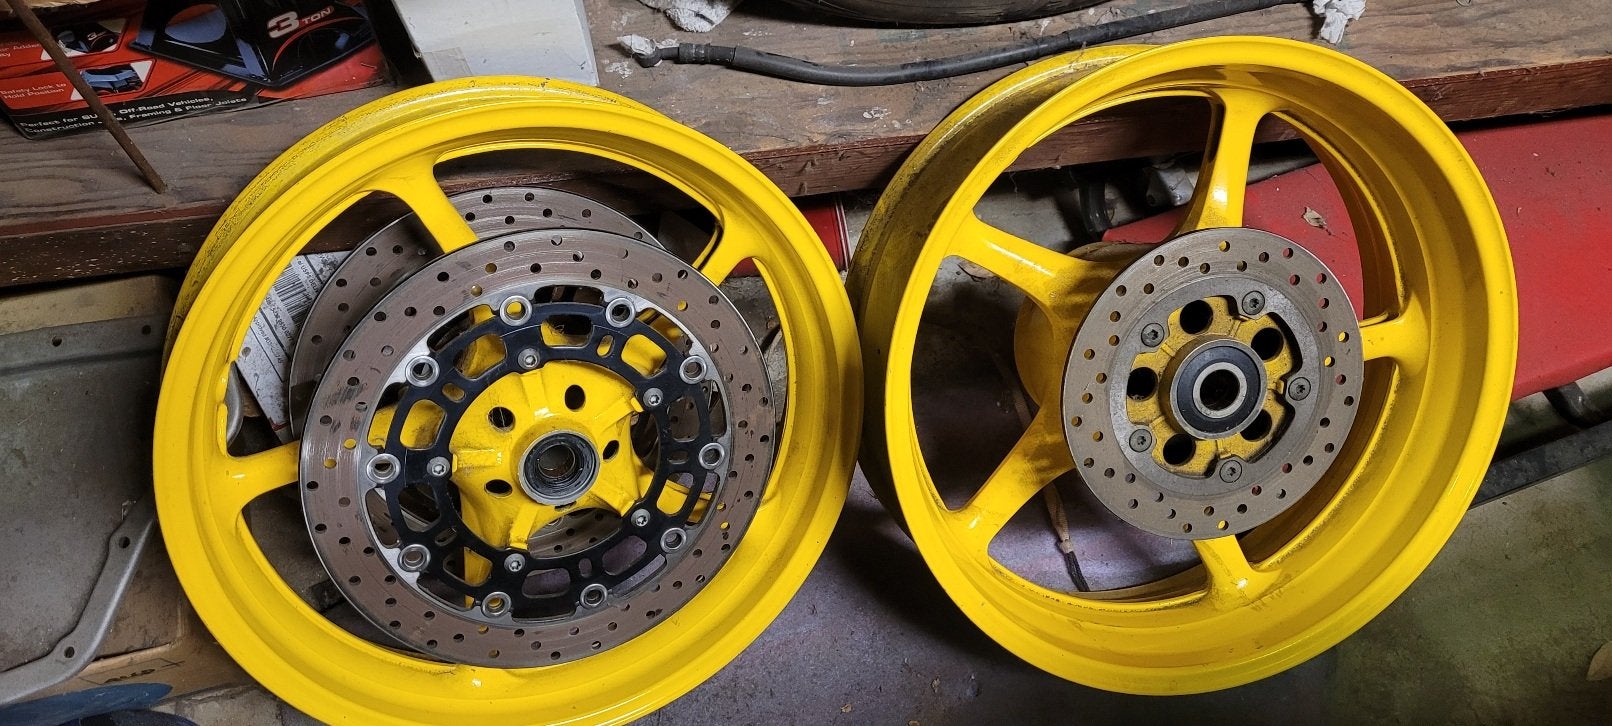 FS: 06-16 R6 Stock Yellow Wheels